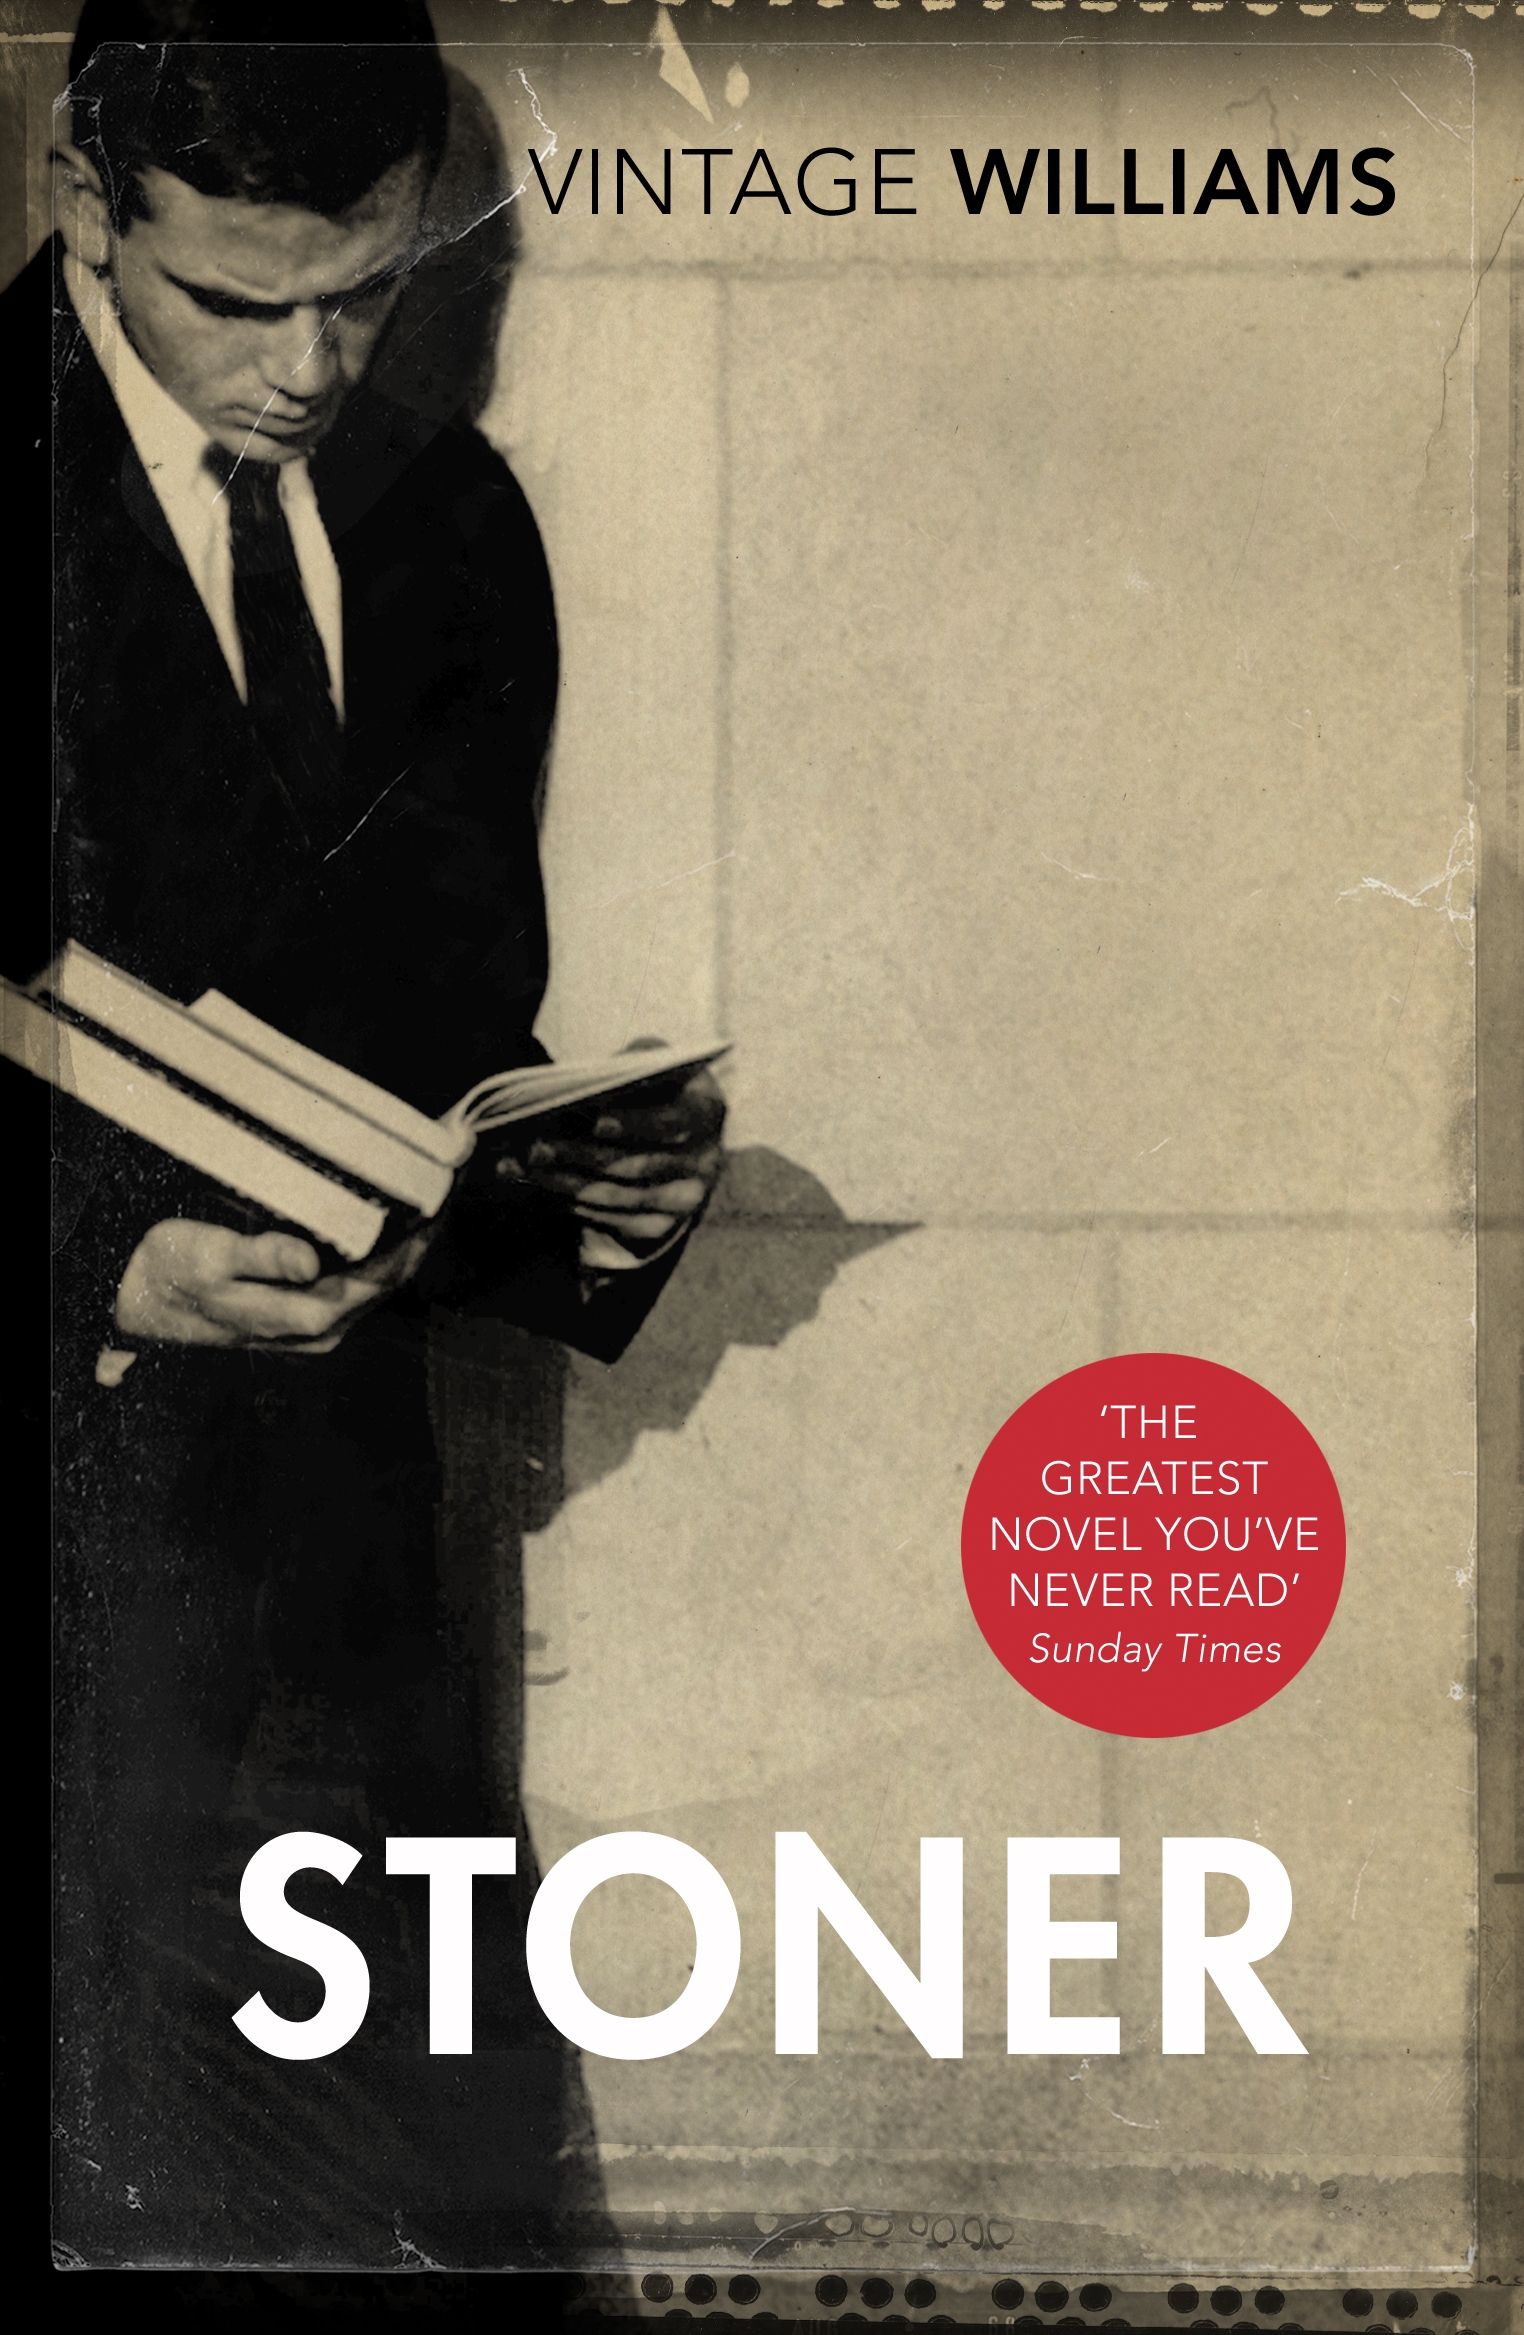 The book cover of John Williams' Stoner